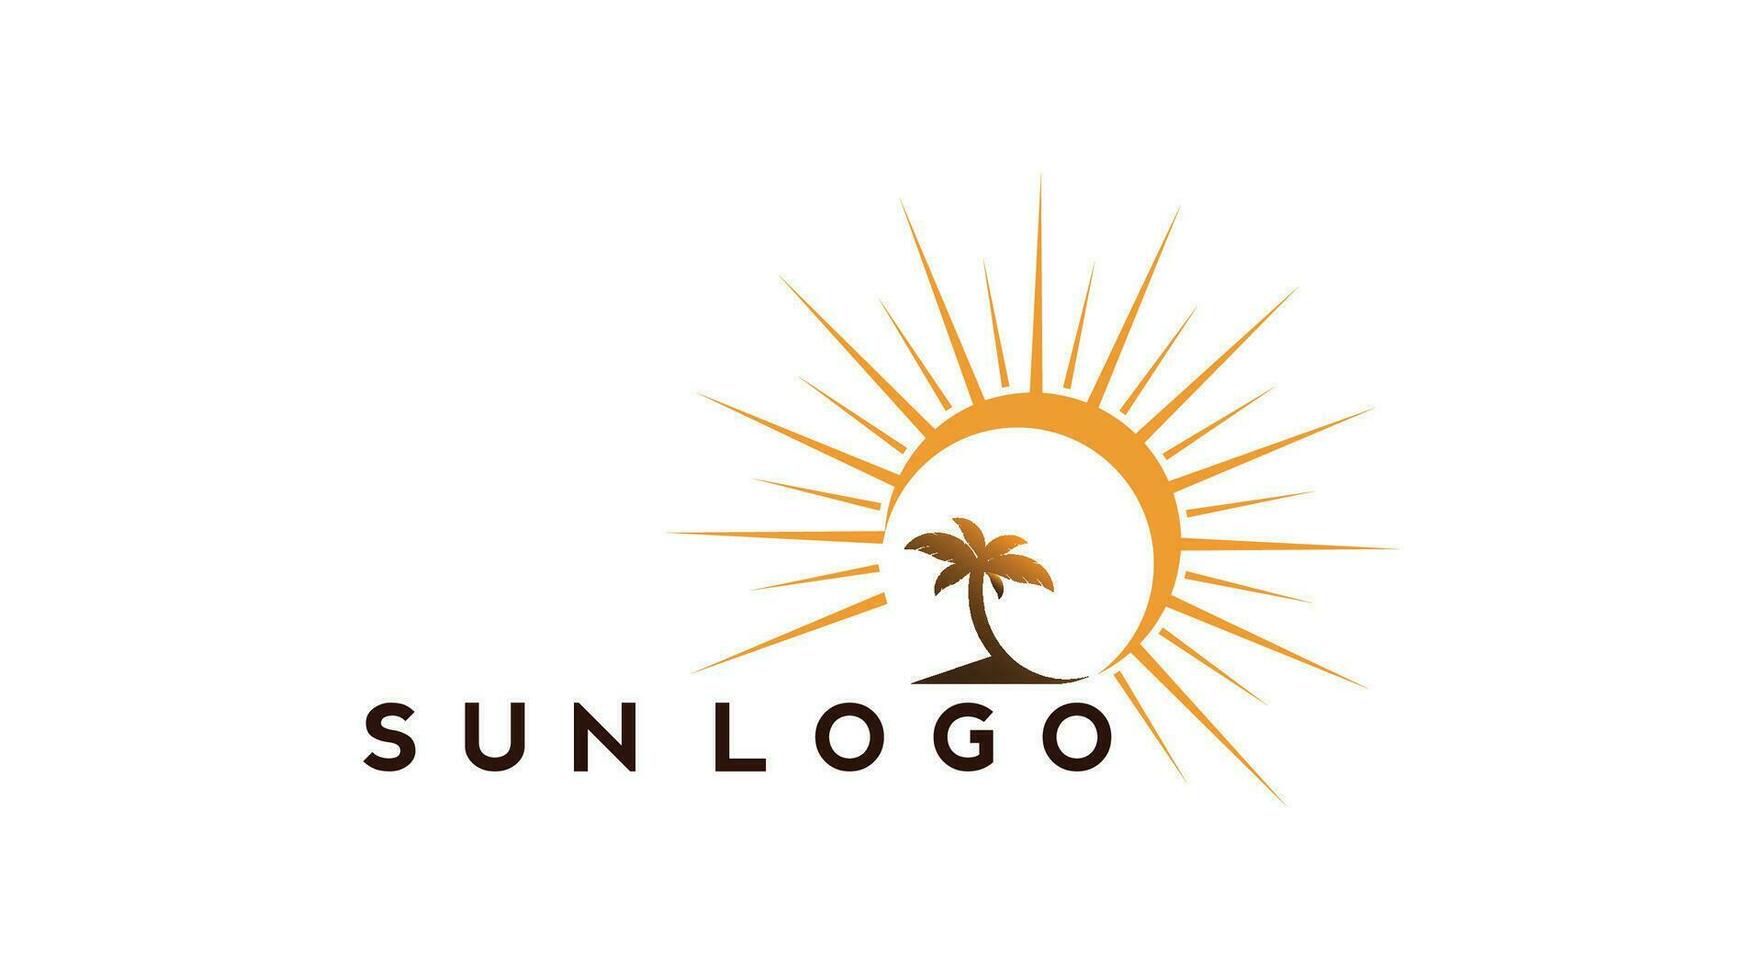 sun logo design on the horizon. summer sign or symbol. Sun icon vector. illustration element. vector